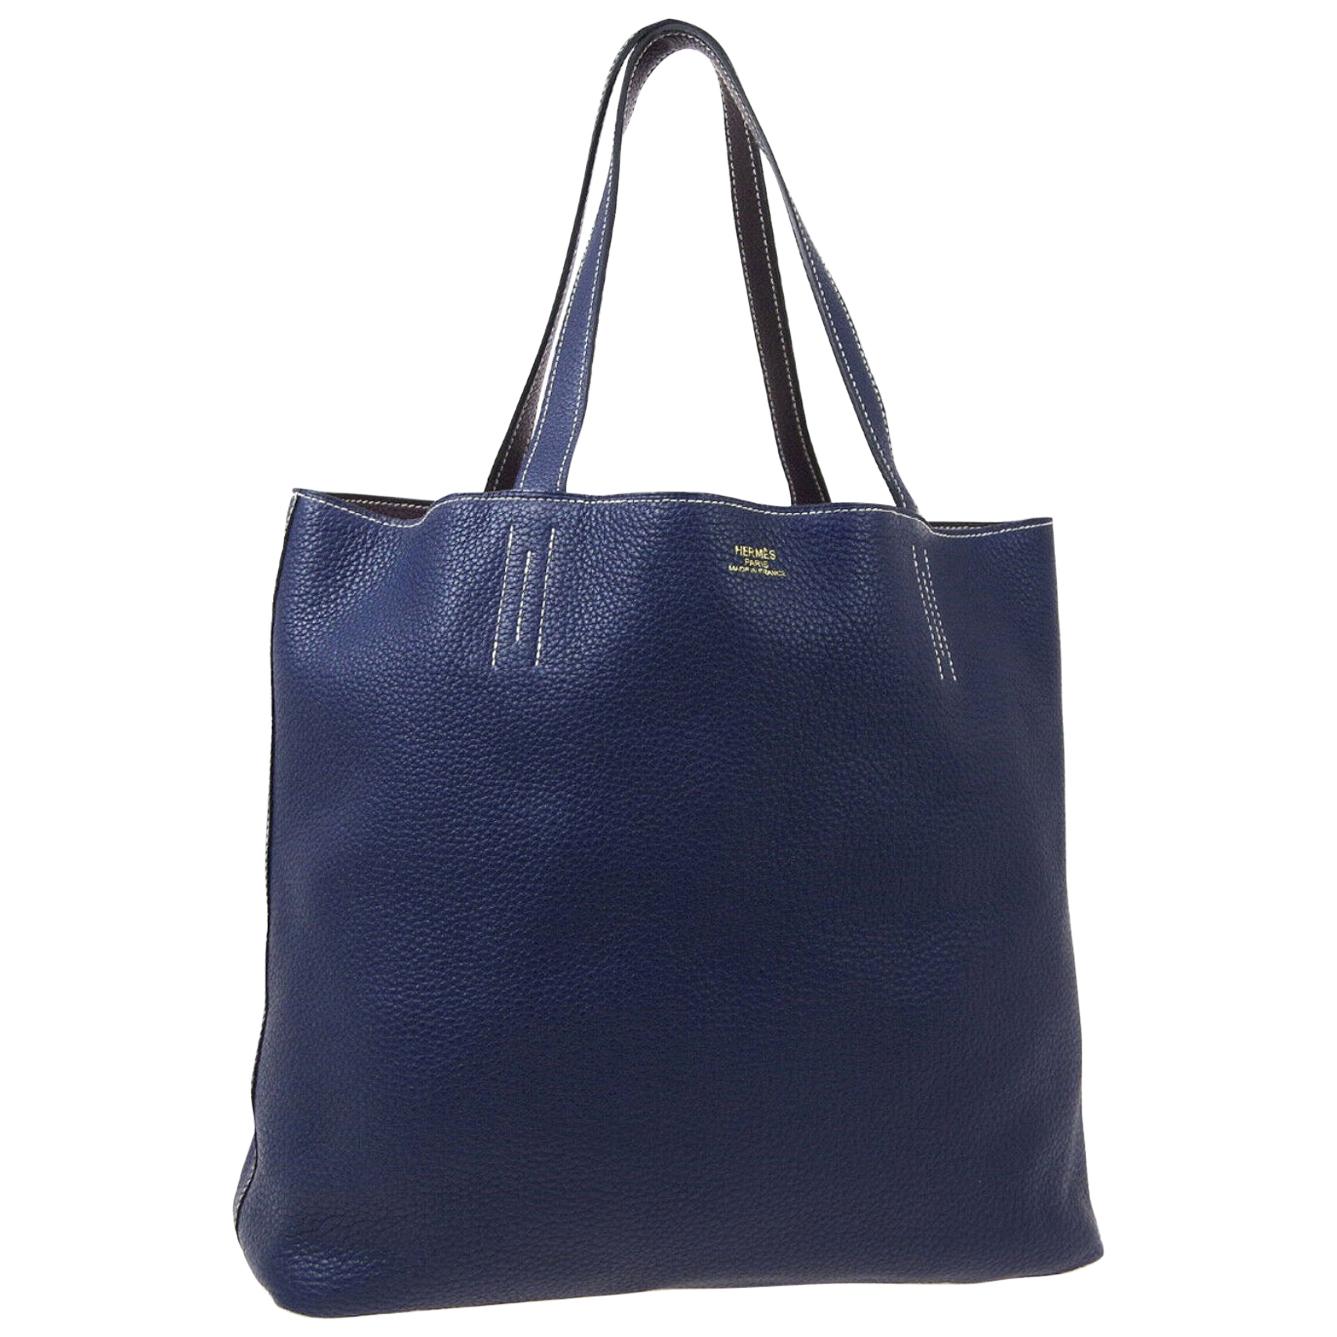  Hermes Blue Purple Leather Reversible Carryall Travel Men's Women's Tote Bag